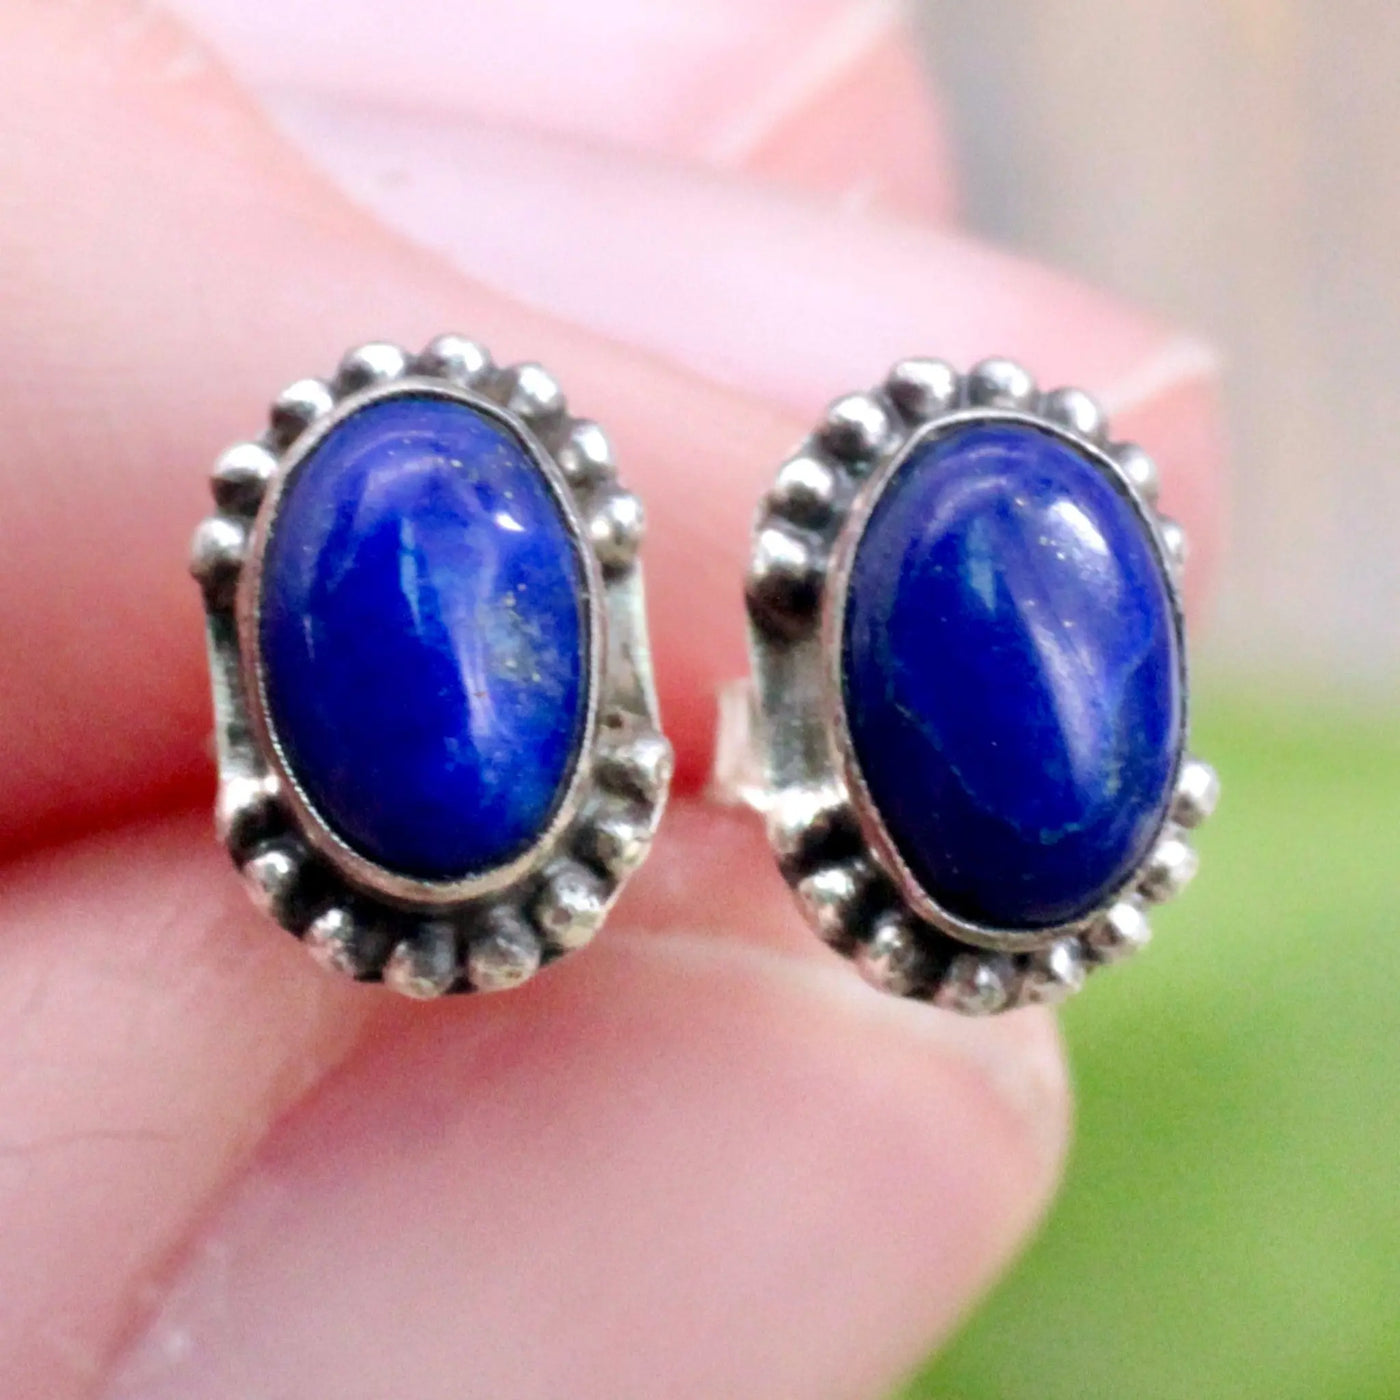 Lapis Lazuli Stud Earrings with Silverwork in Sterling Silver